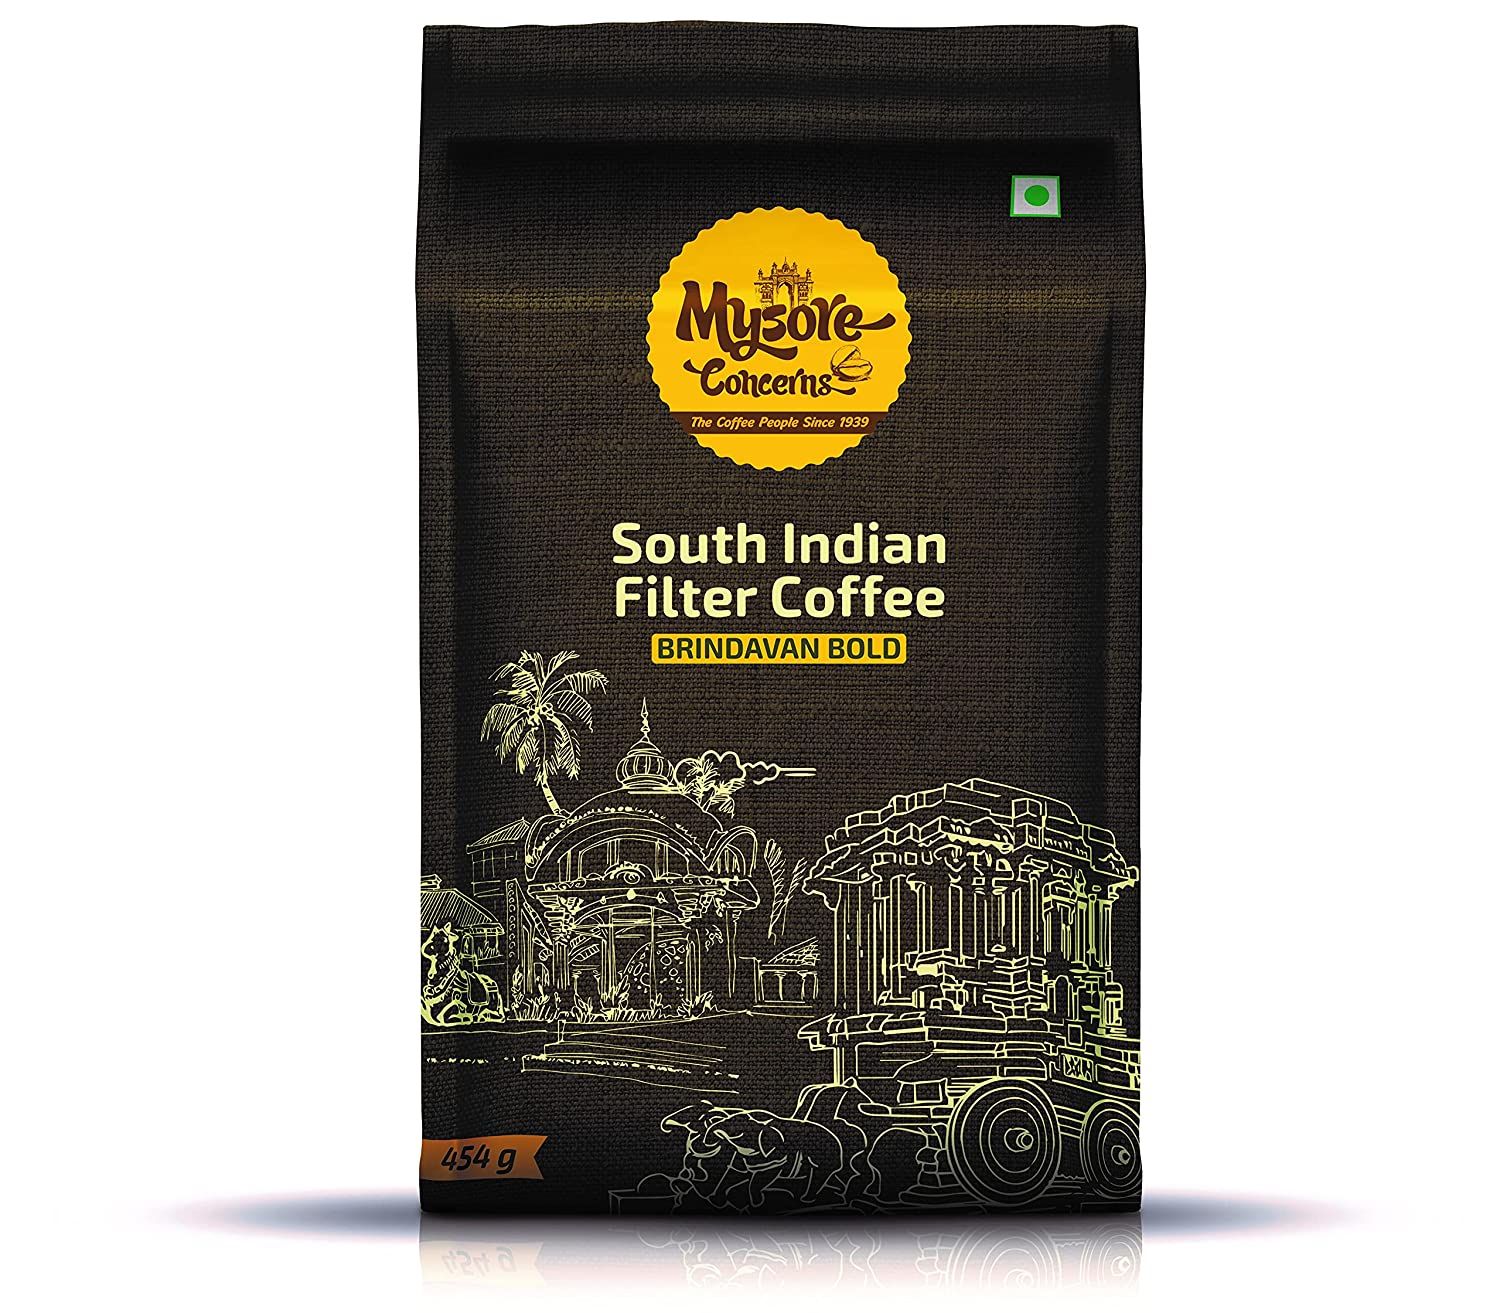 Mysore Concerns Brindavan Bold South Indian Filter Coffee Image